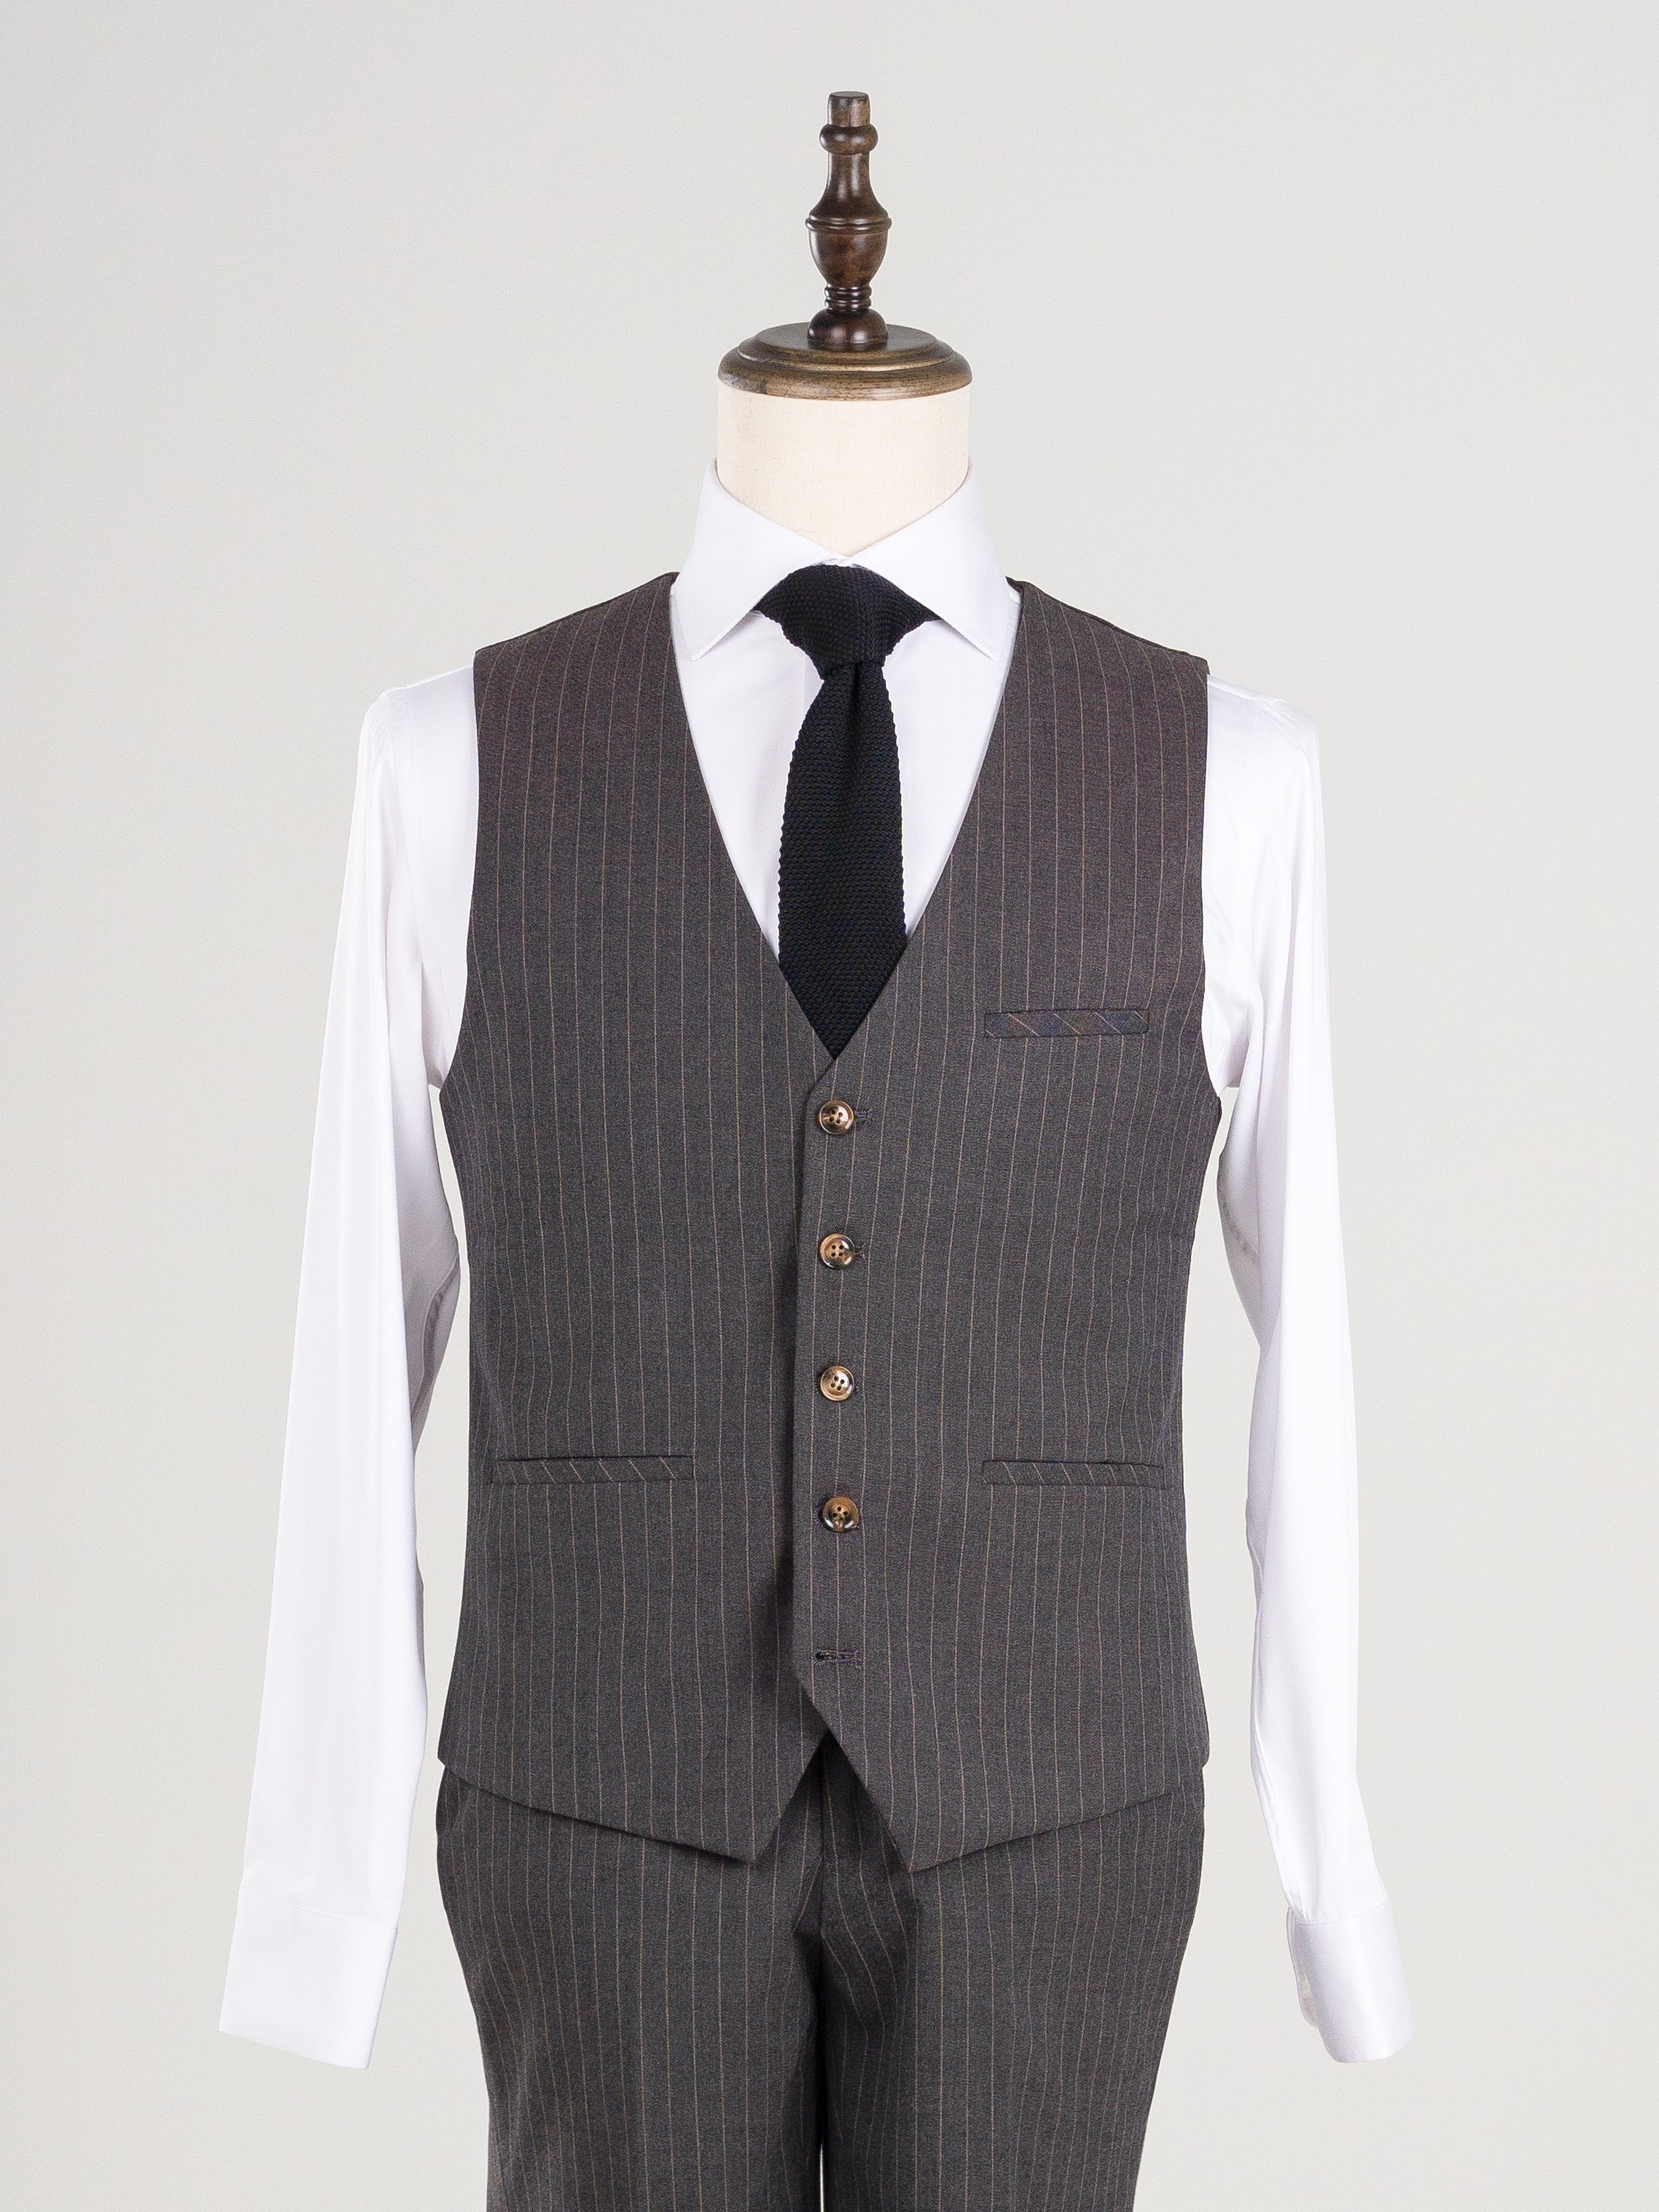 Vest - Dark Grey with Brown Pinstripes